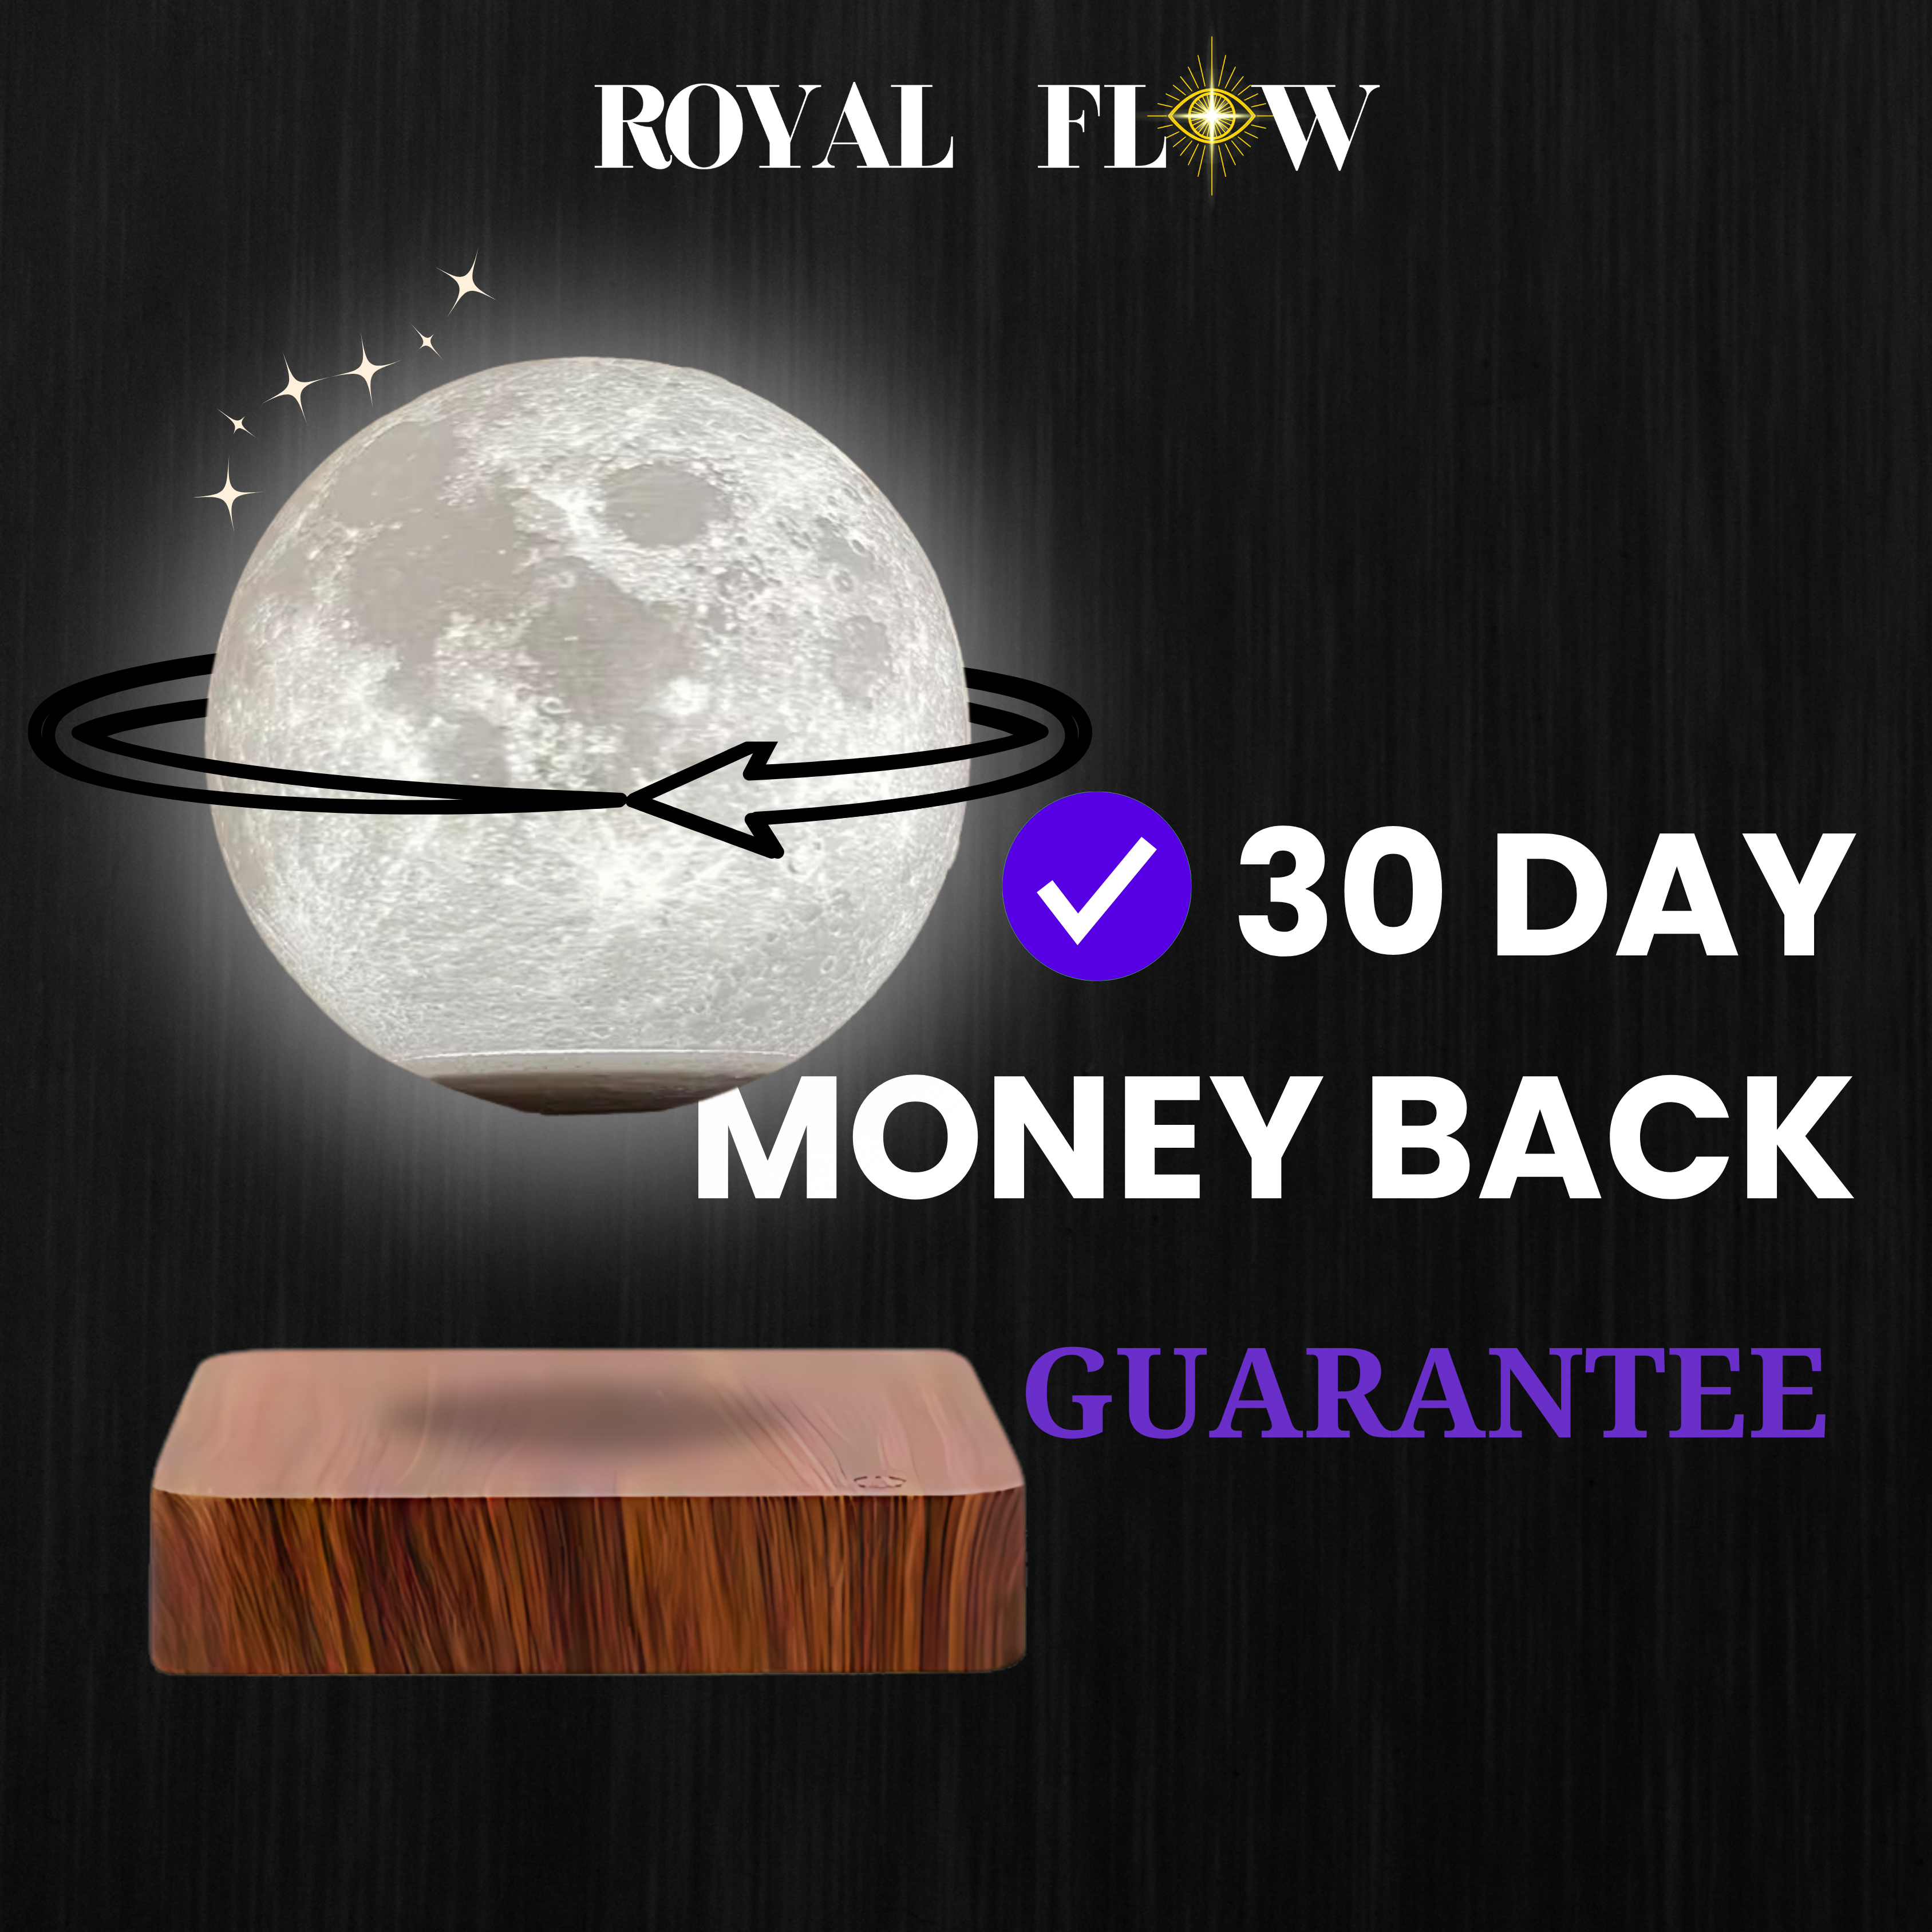 Royal Flow™ Meditation Levitating Moon Lamp